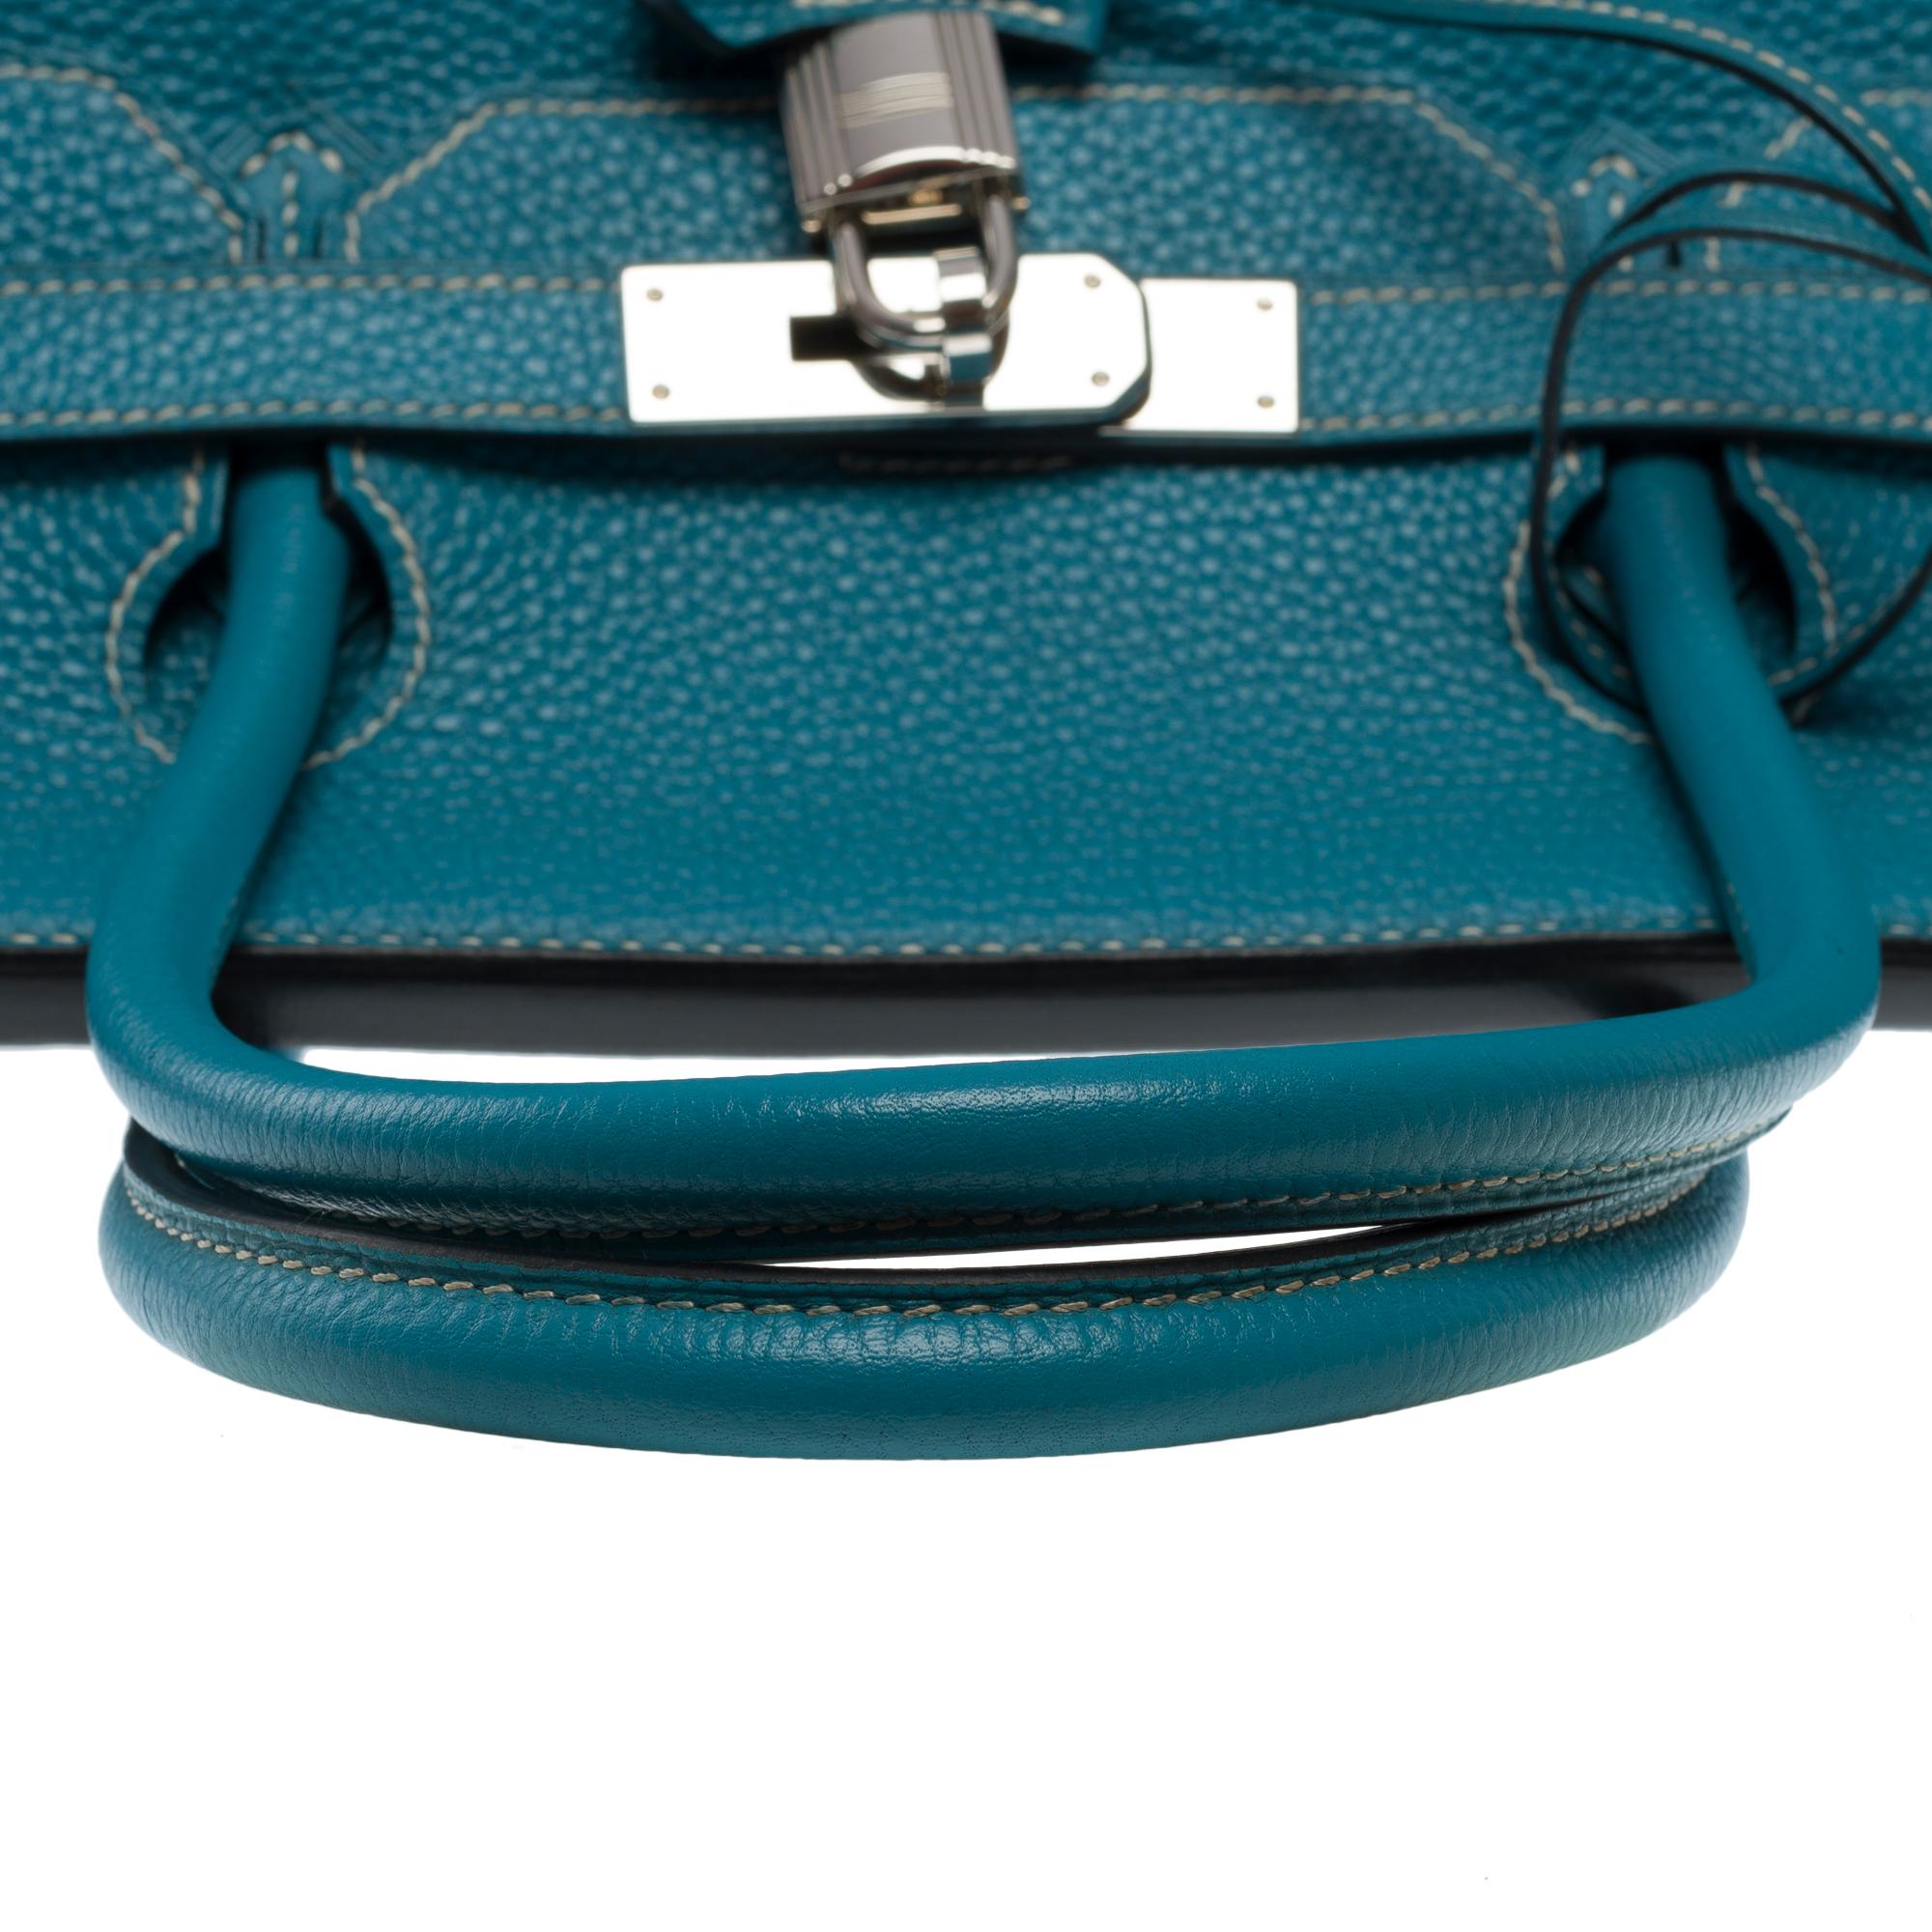 Stunning Hermes Birkin 40cm handbag in Blue Jean Togo leather, SHW 4